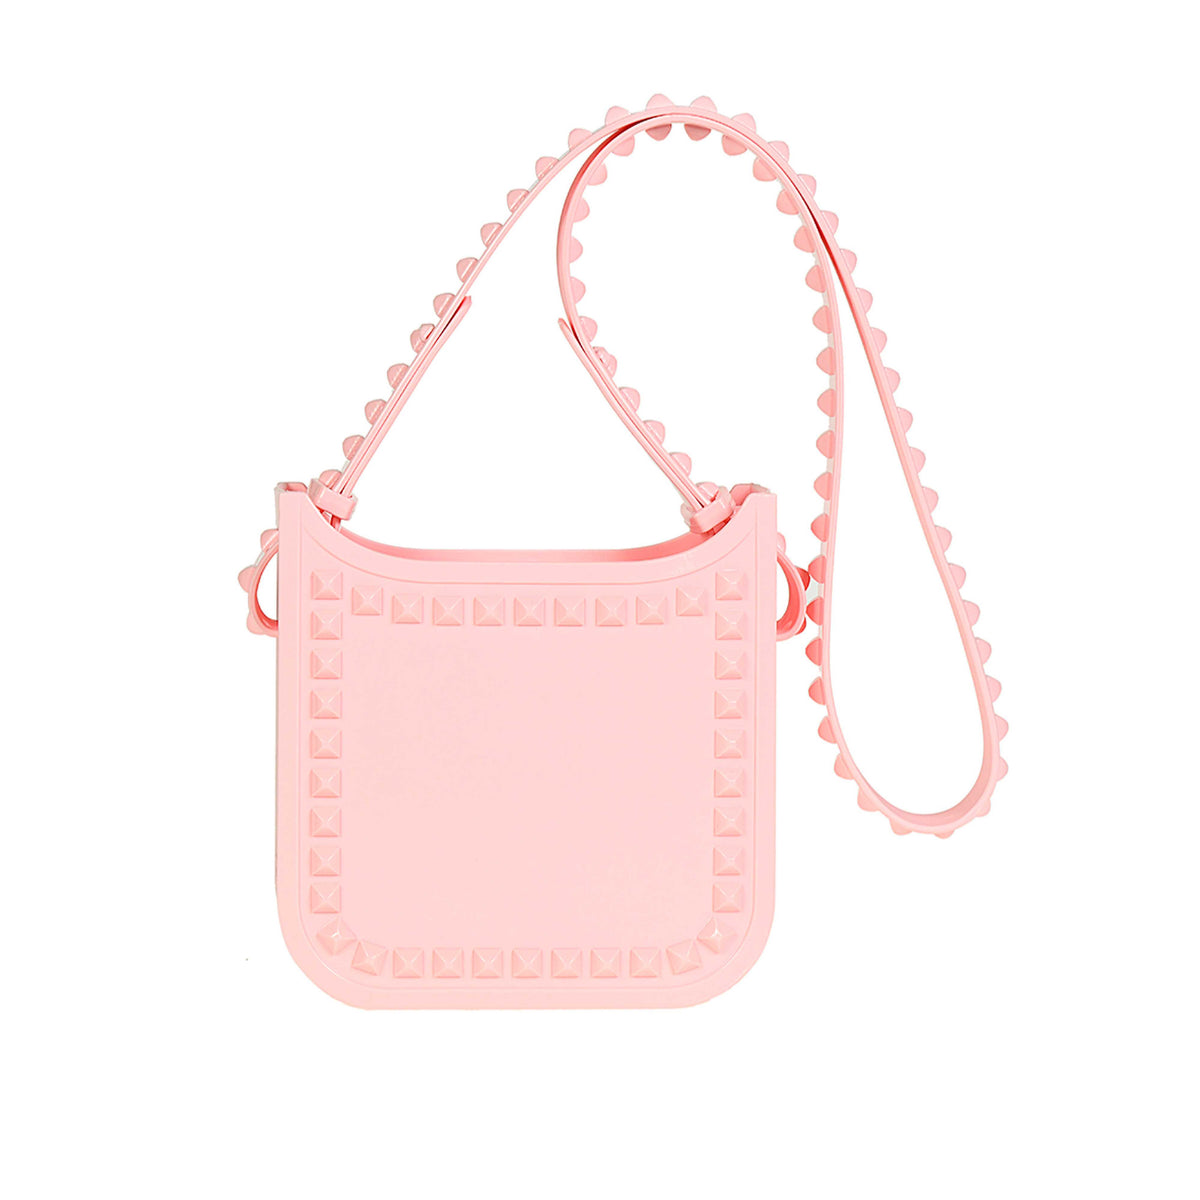 Baby pink small Lisa crossbody beach bags for women